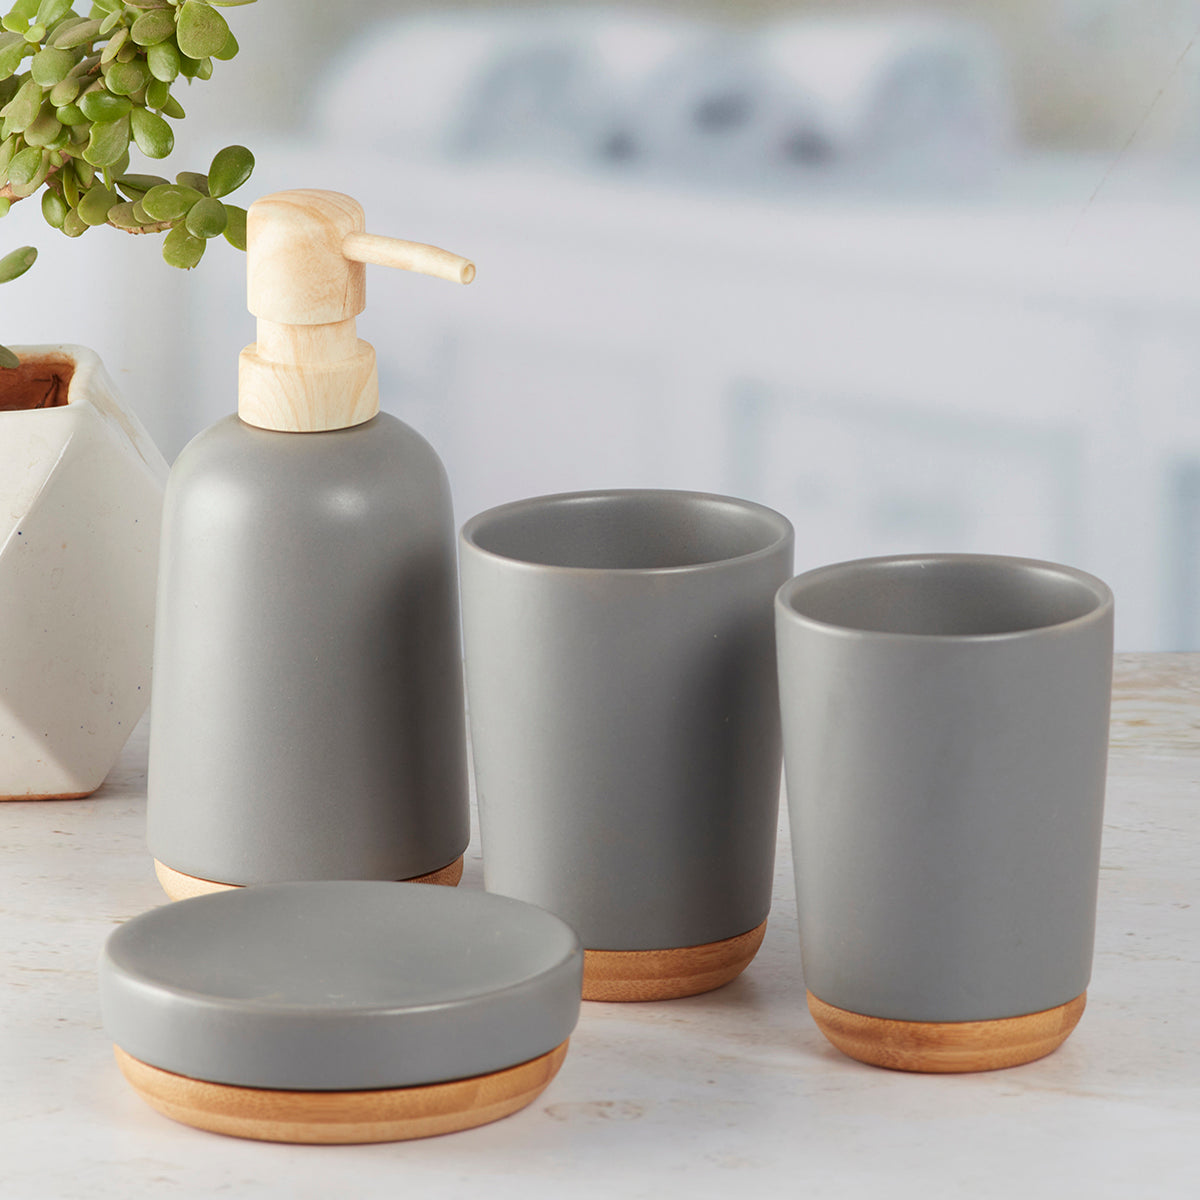 Ceramic Bathroom Accessories Set of 4 Bath Set with Soap Dispenser (9619)